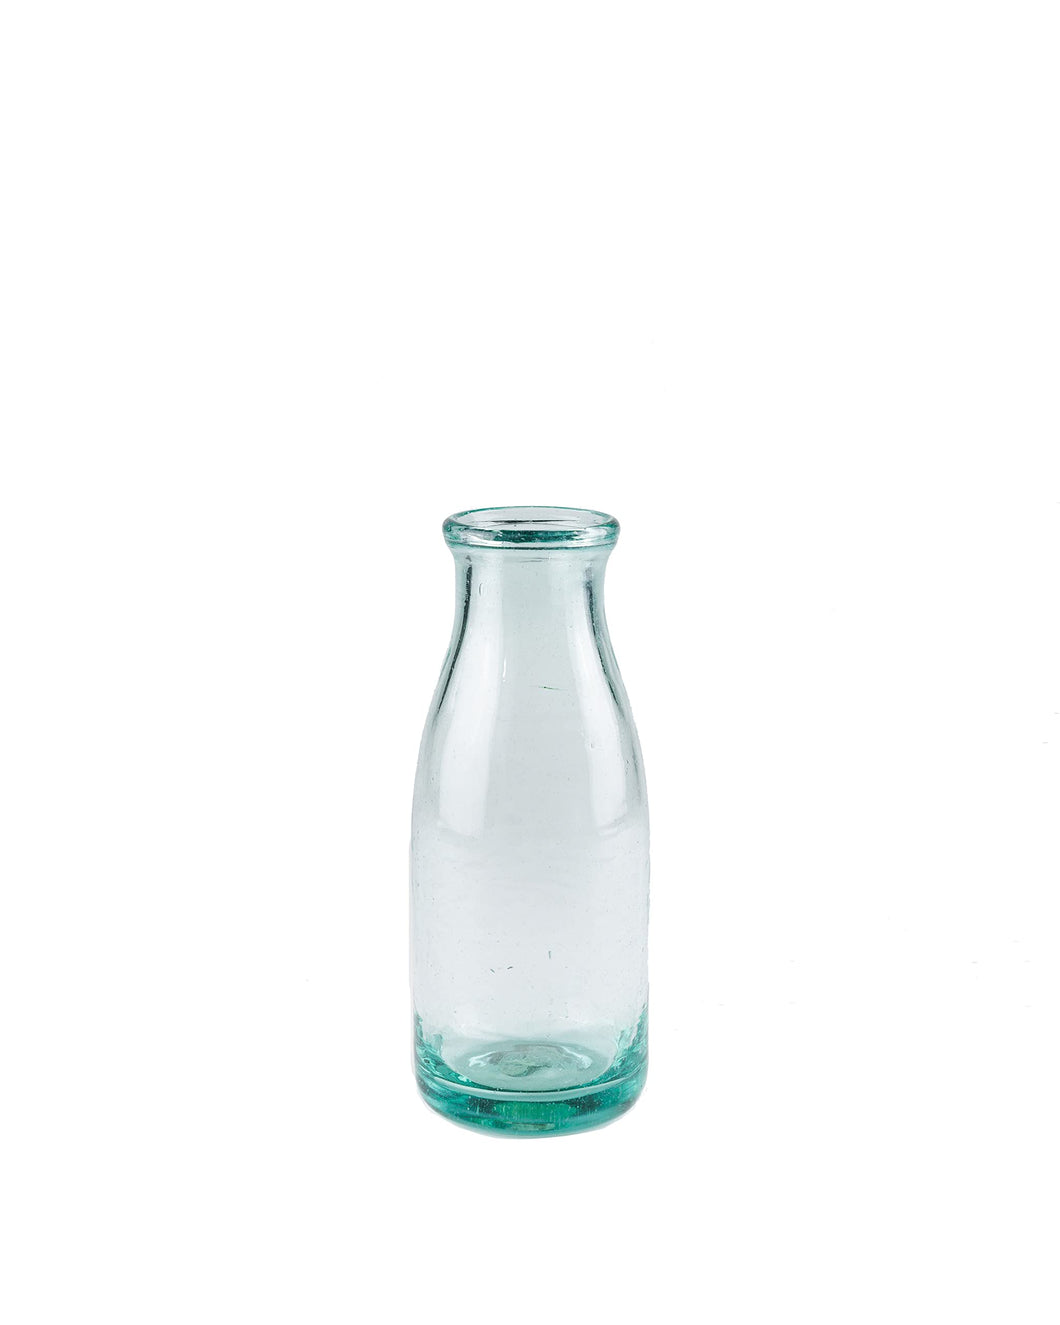 Milk Bottle Vases  Yesterday On Tuesday